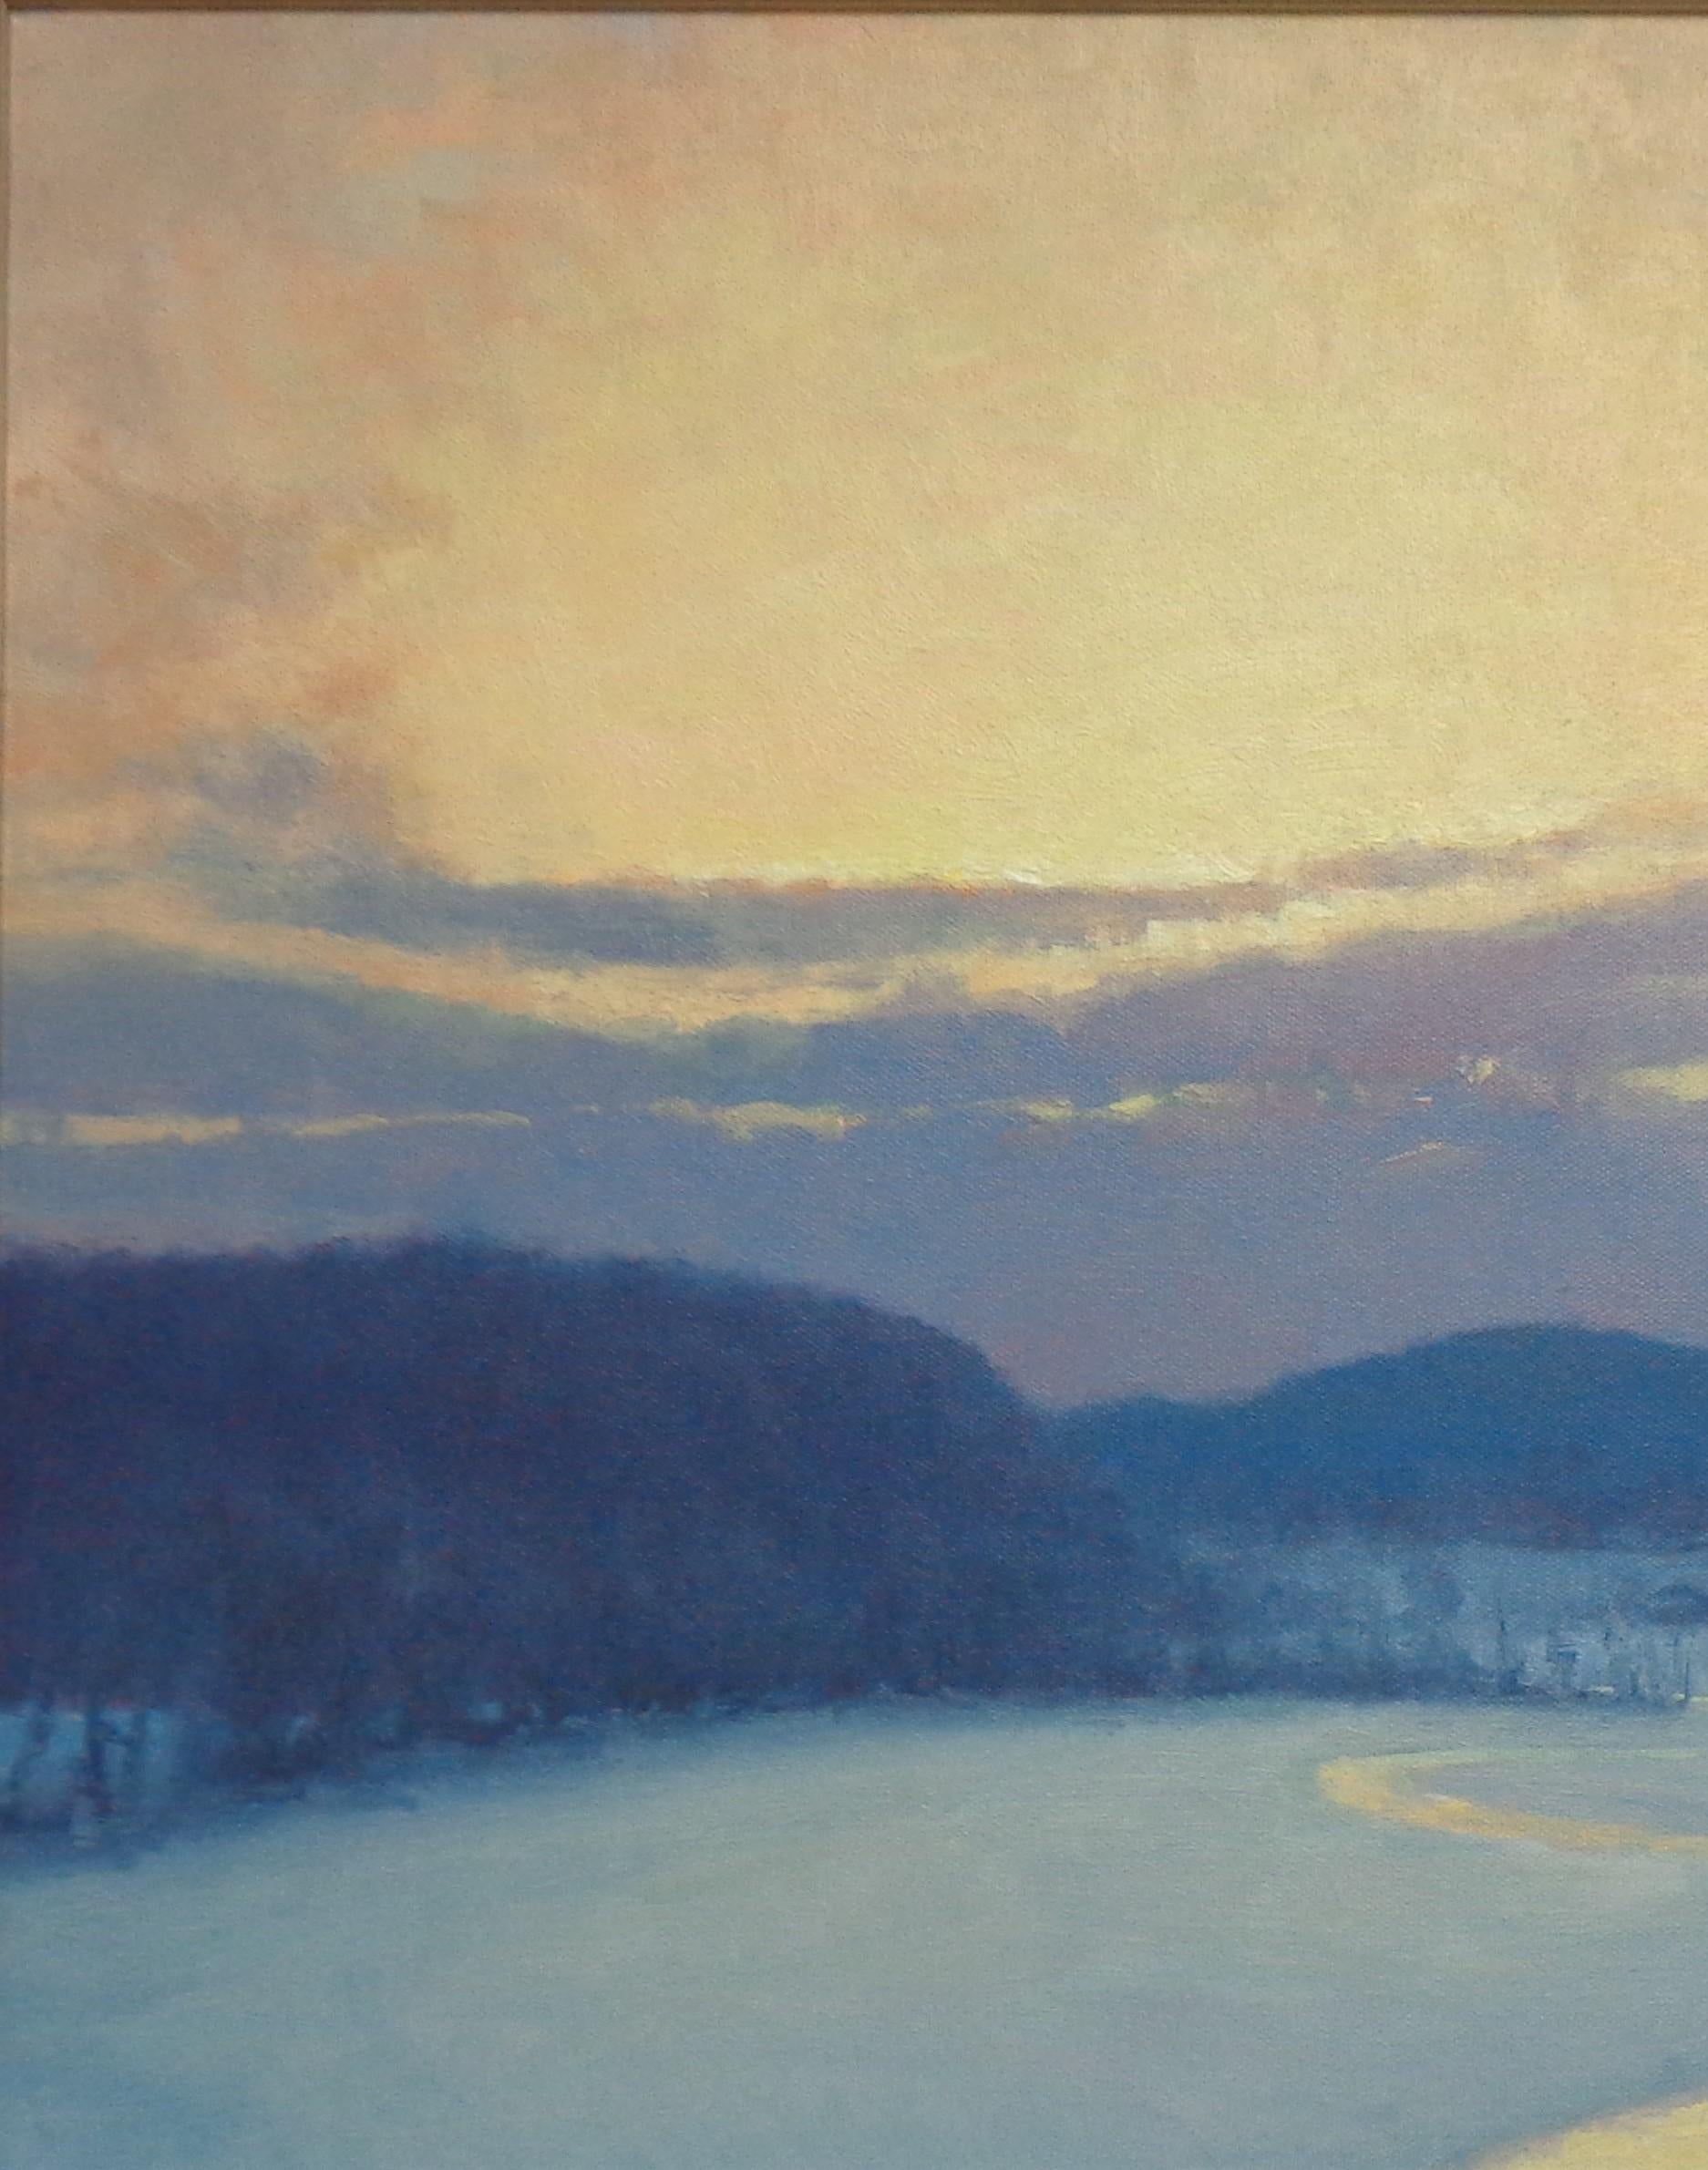   Winter Sunset Landscape Oil Painting by Michael Budden Winter Evening Sundown For Sale 2